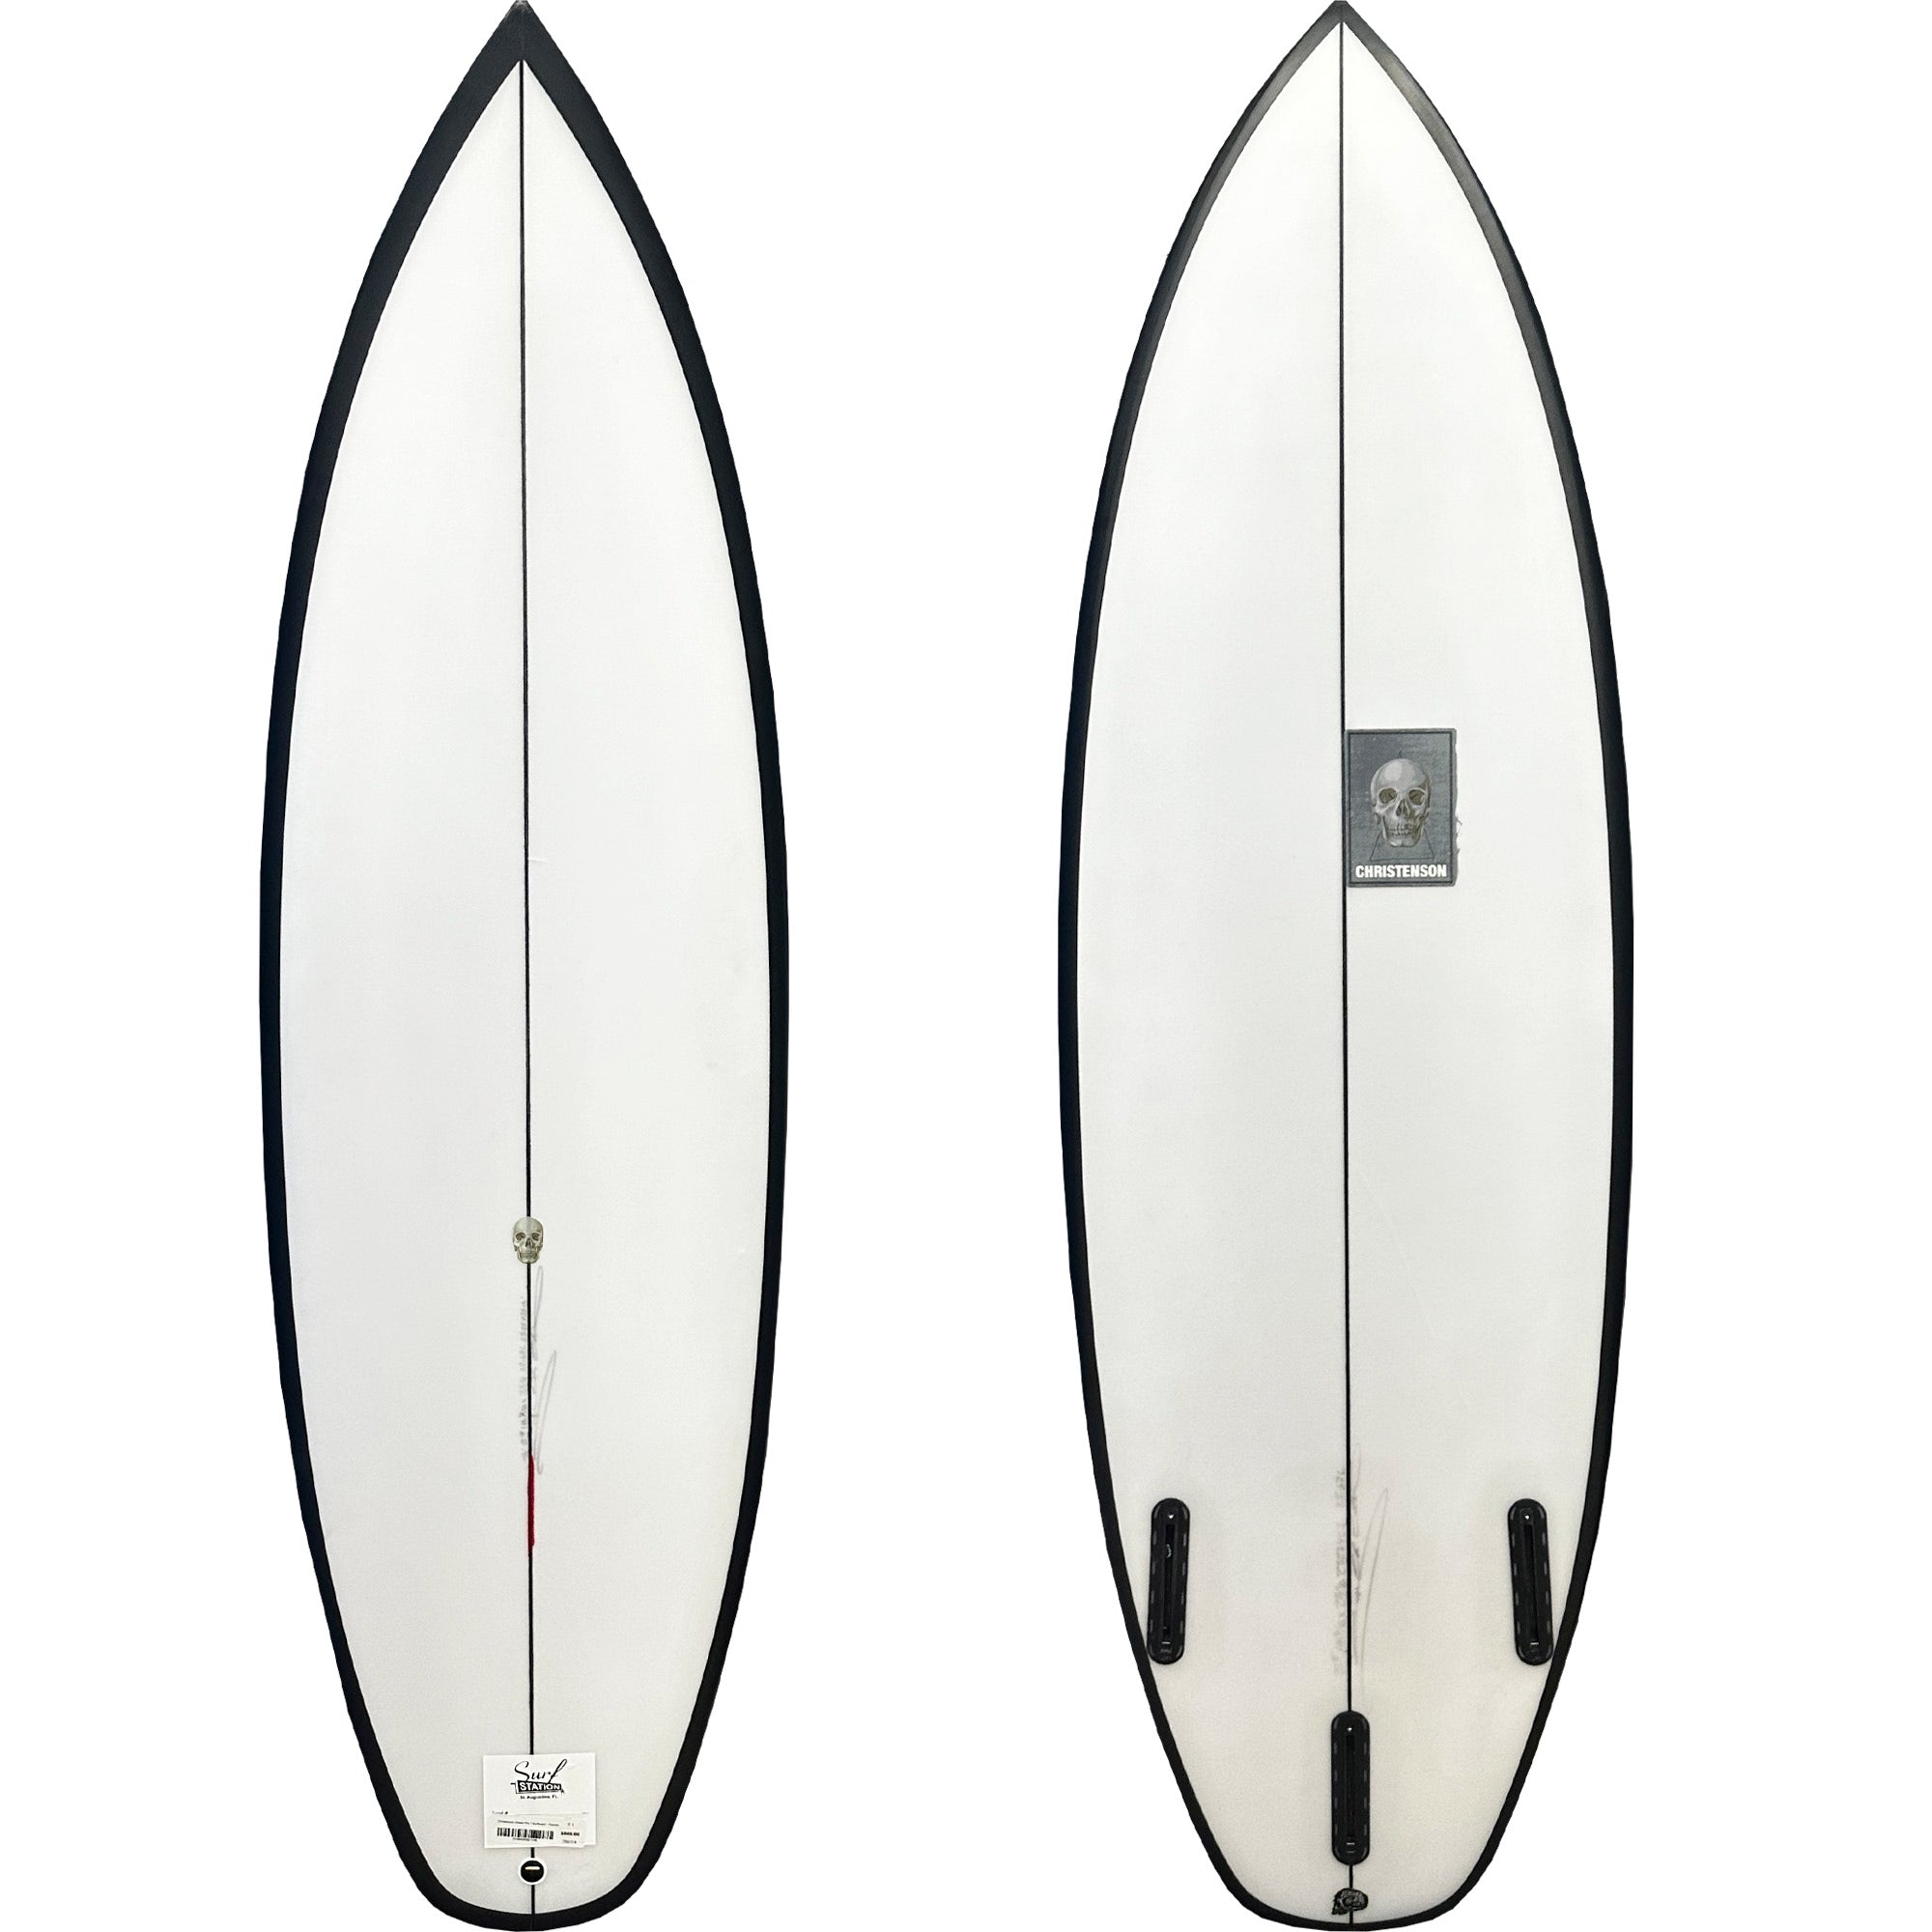 Christenson Ocean Pro 1 Surfboard - Futures